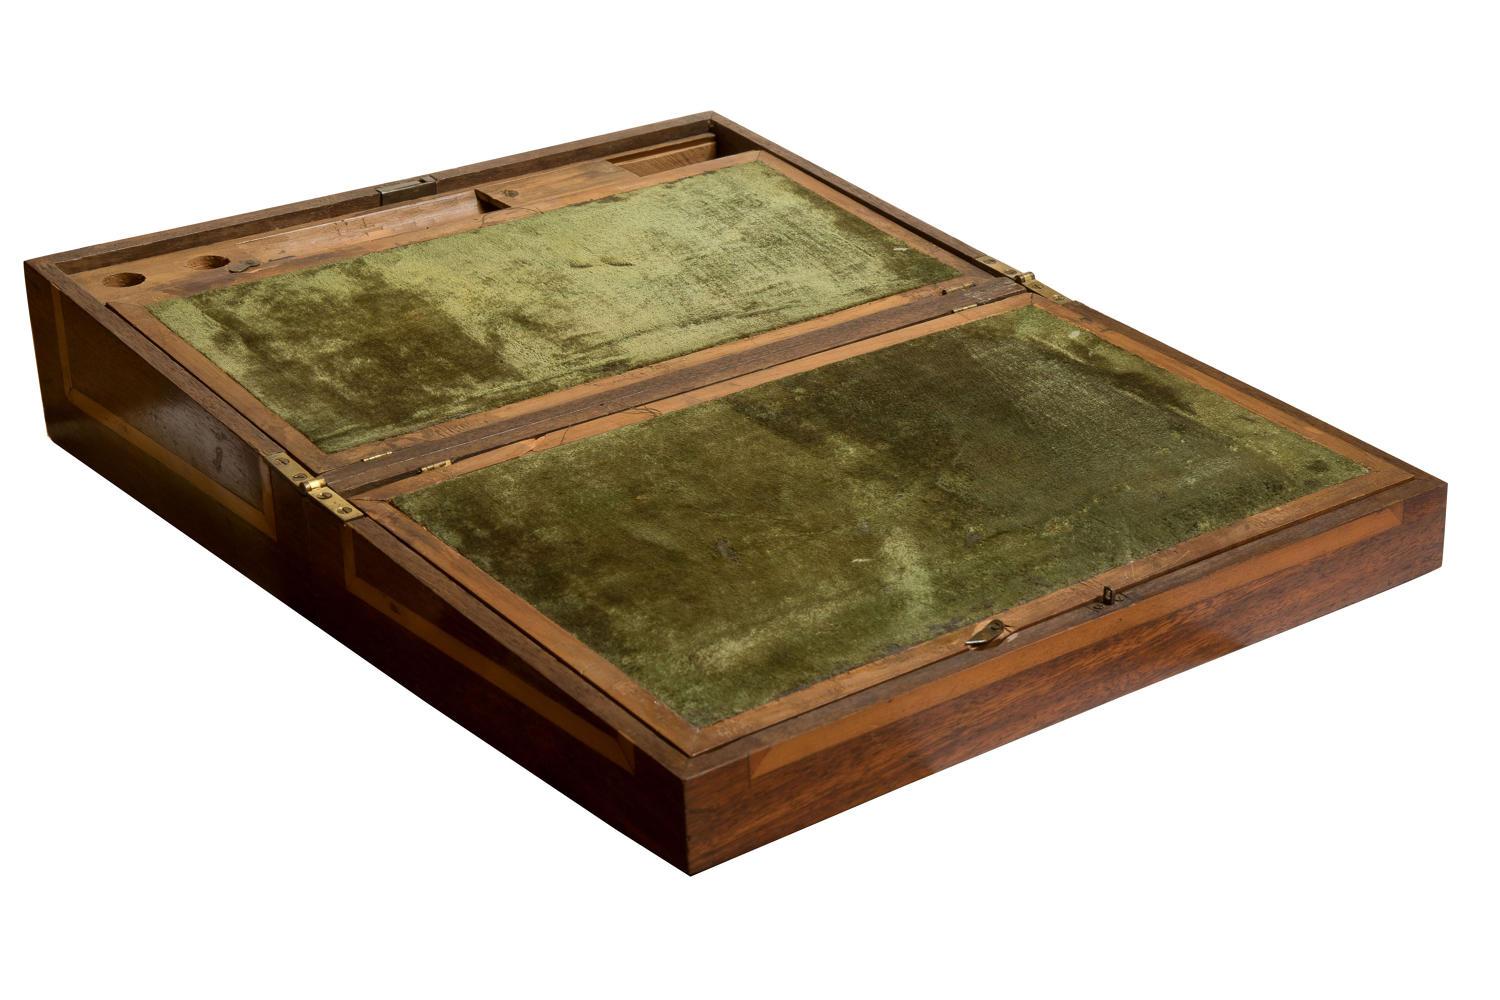 Irish mahogany writing box/lap desk inlaid with various symbols including a harp, shamrock etc,

circa 1880.